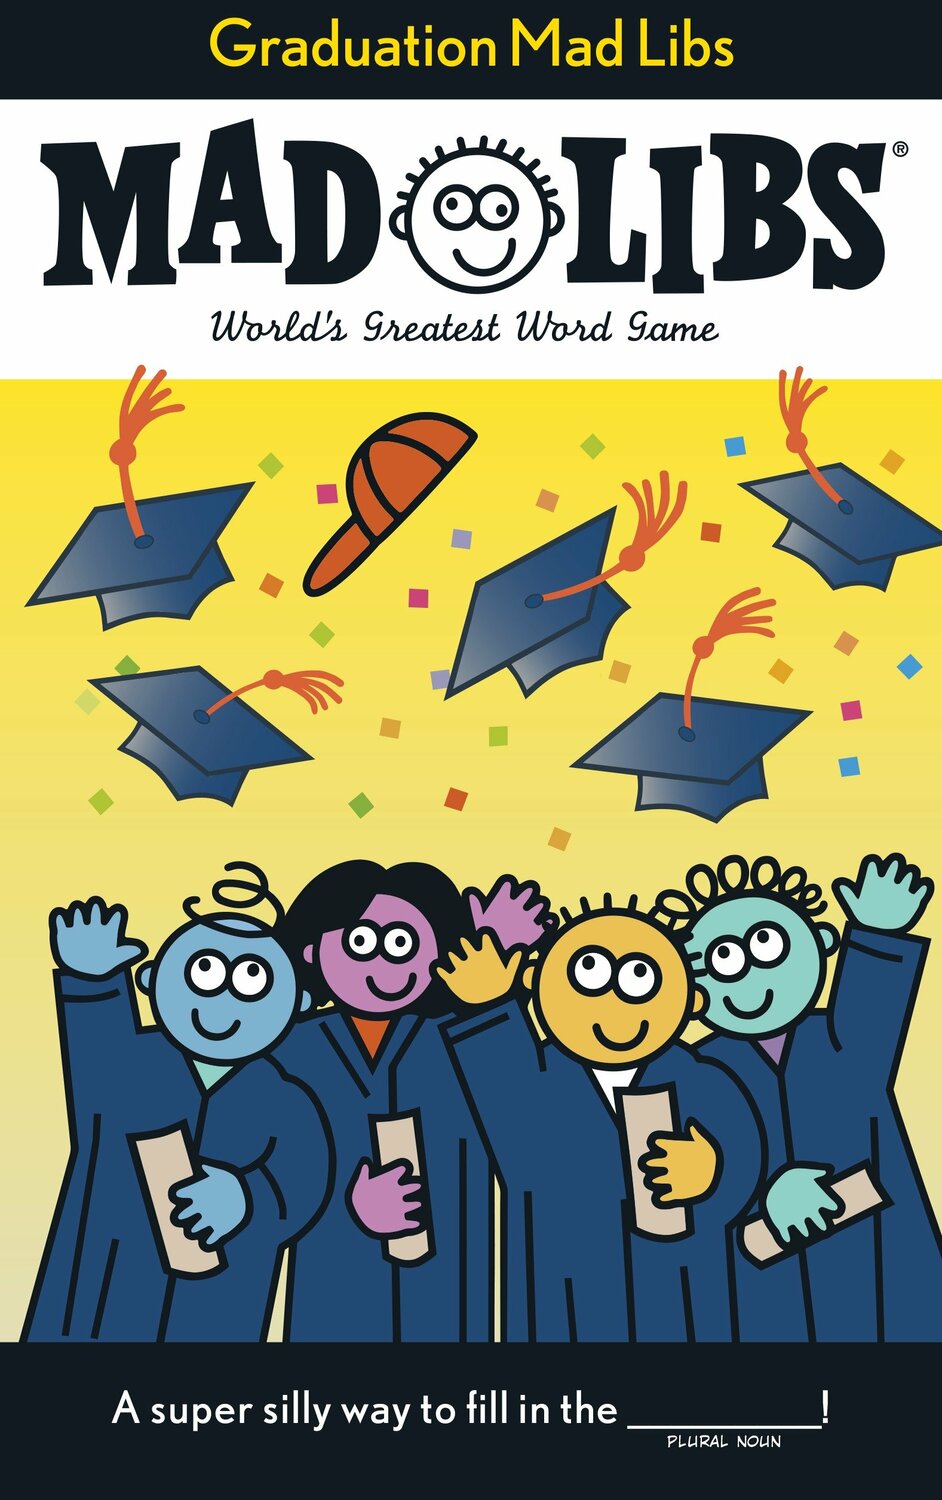 Graduation Mad Libs: World's Greatest Word Game